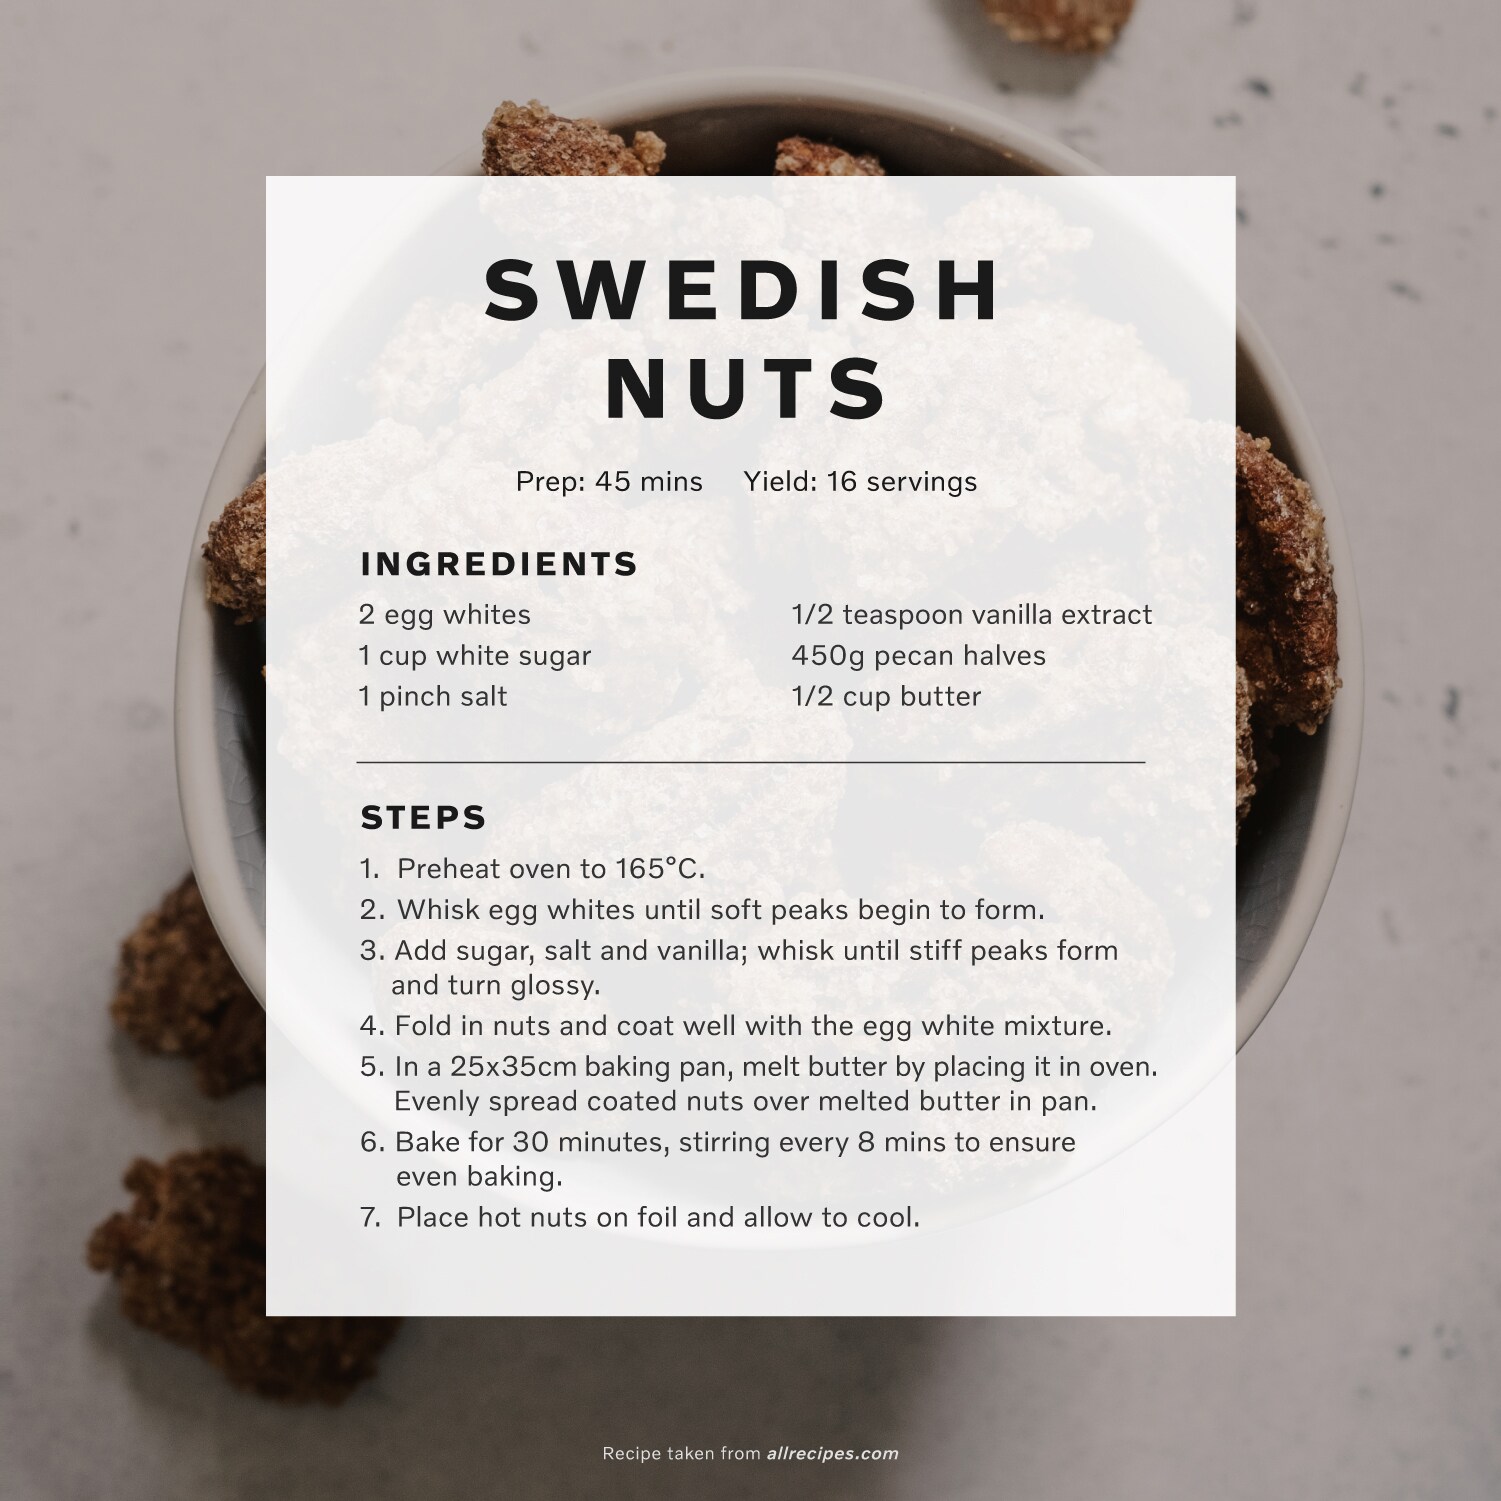 SWEDISH NUTS